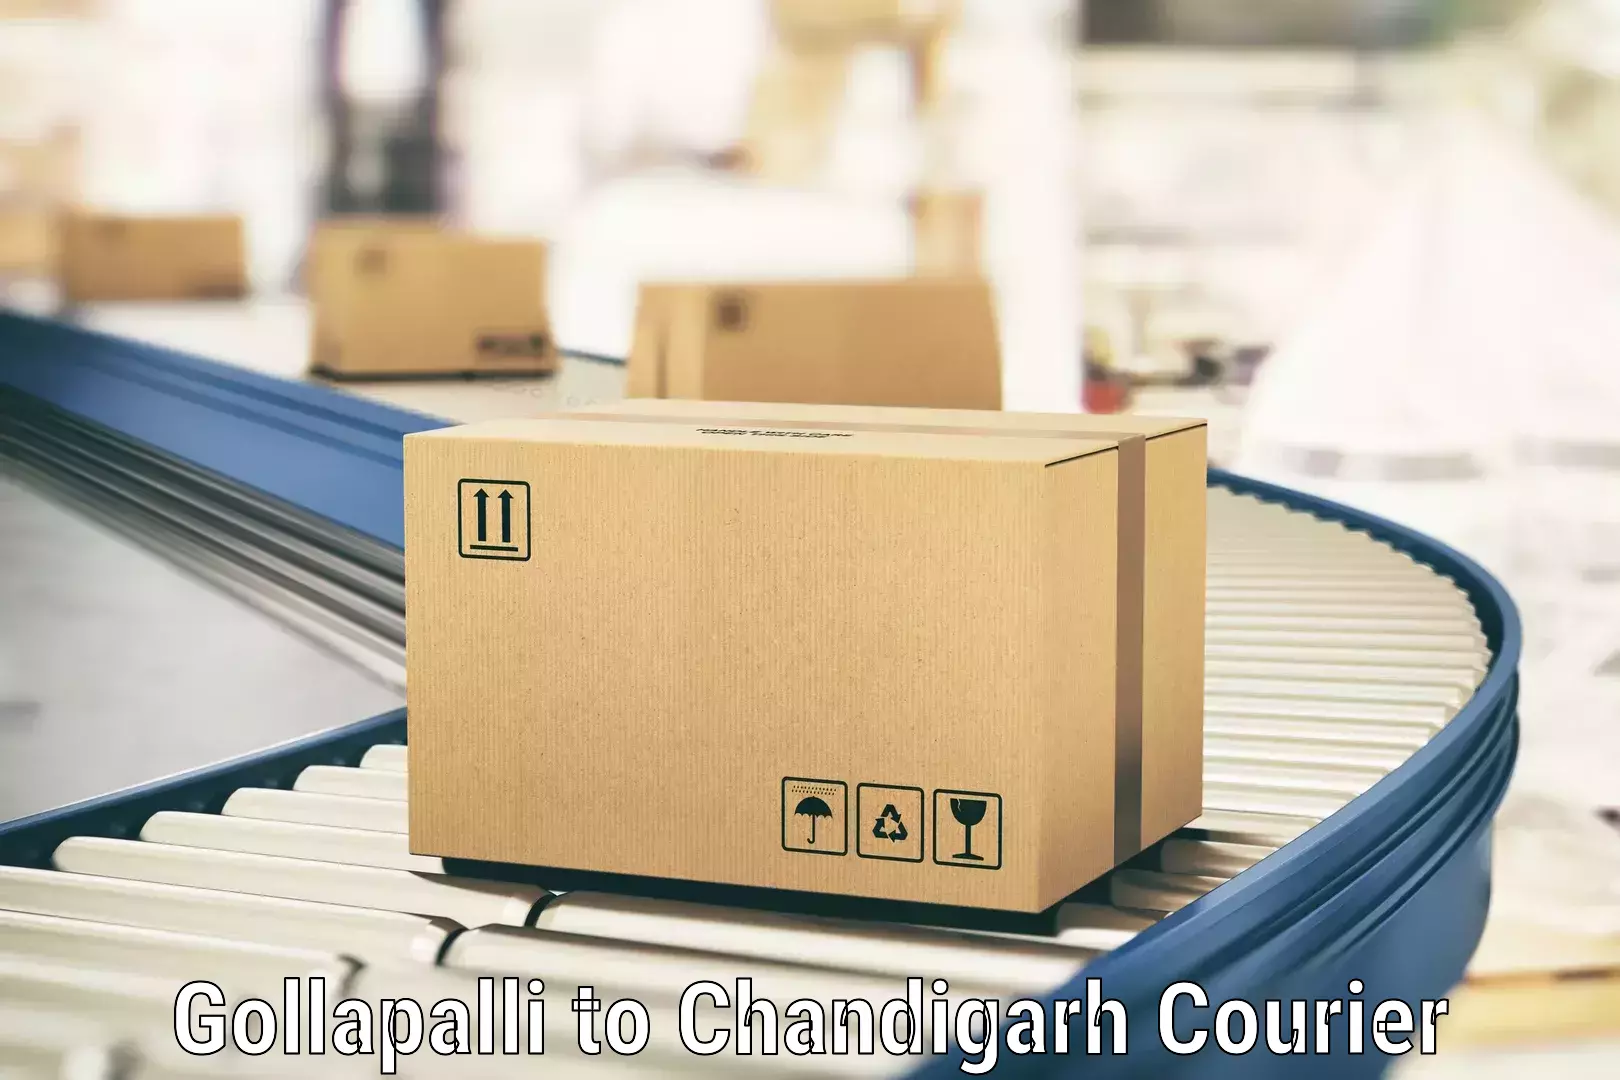 Express logistics providers Gollapalli to Chandigarh